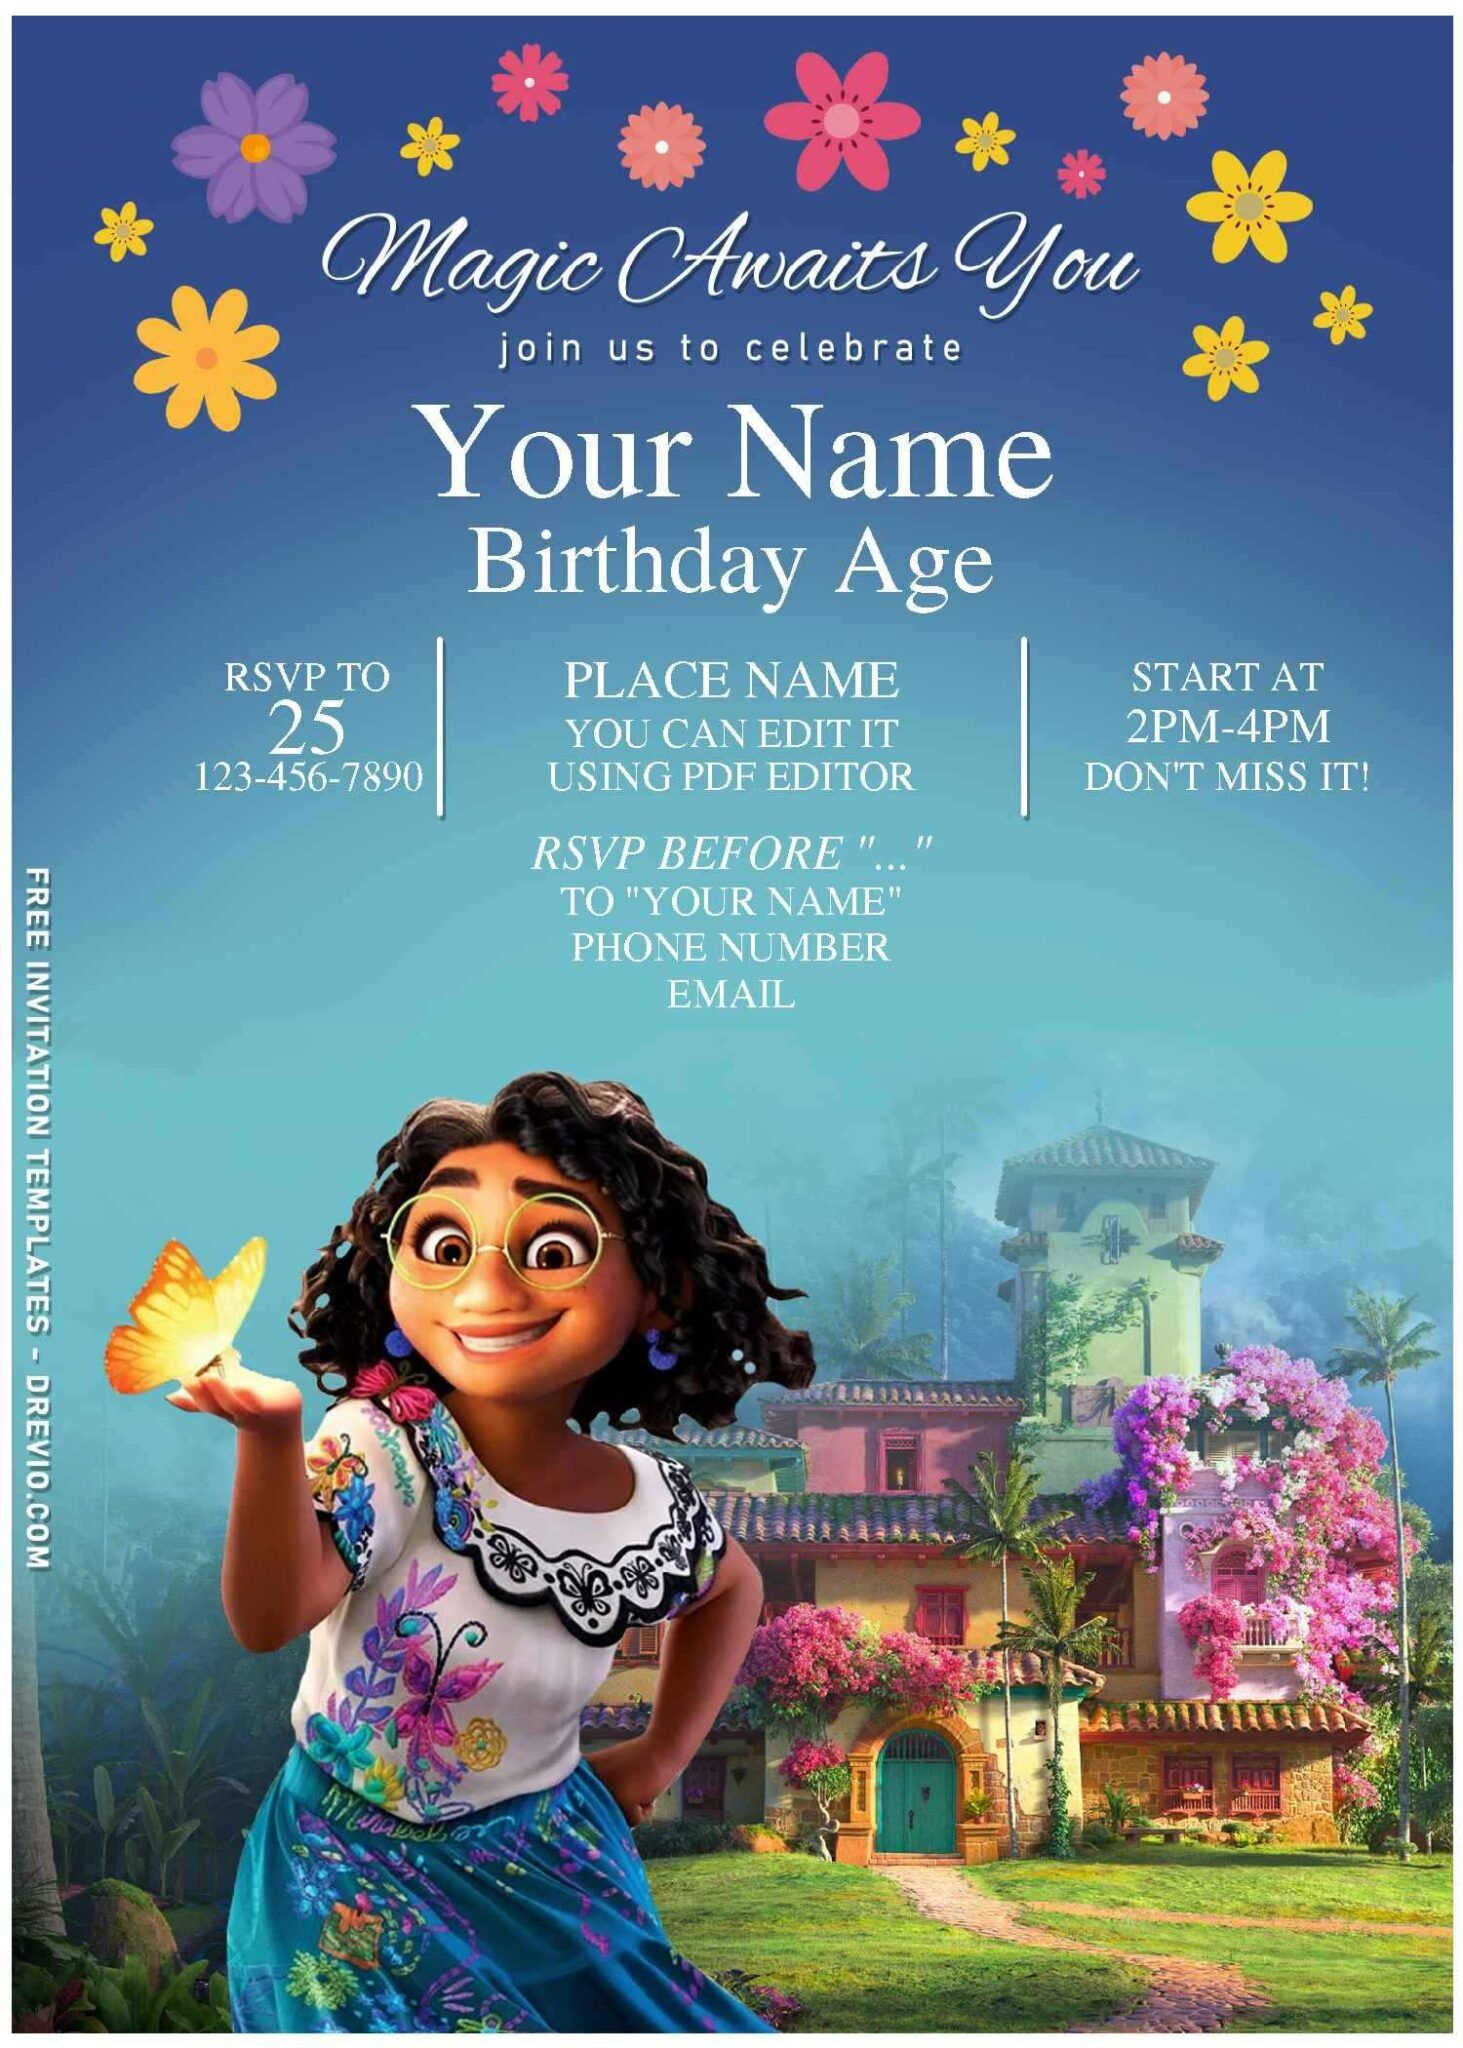 Encanto Birthday Invitations Template Free FREE PRINTABLE TEMPLATES